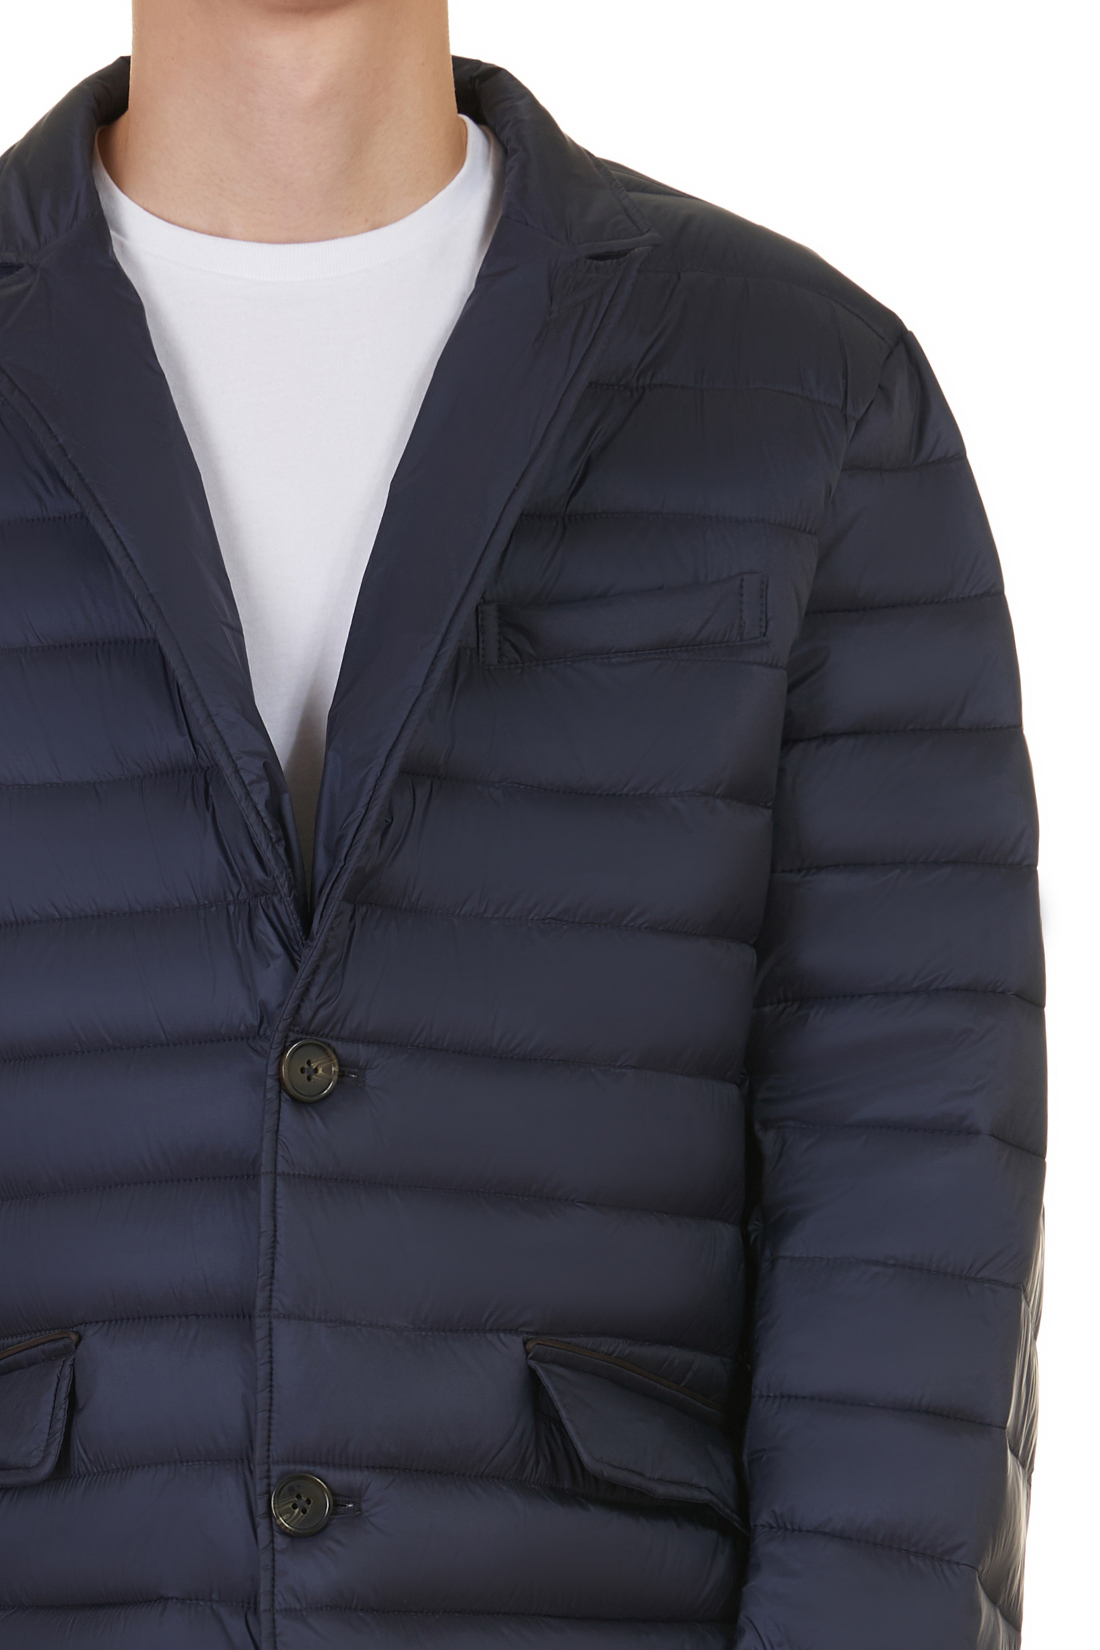 Куртка-пиджак (арт. baon B537561), размер XL, цвет синий Куртка-пиджак (арт. baon B537561) - фото 4